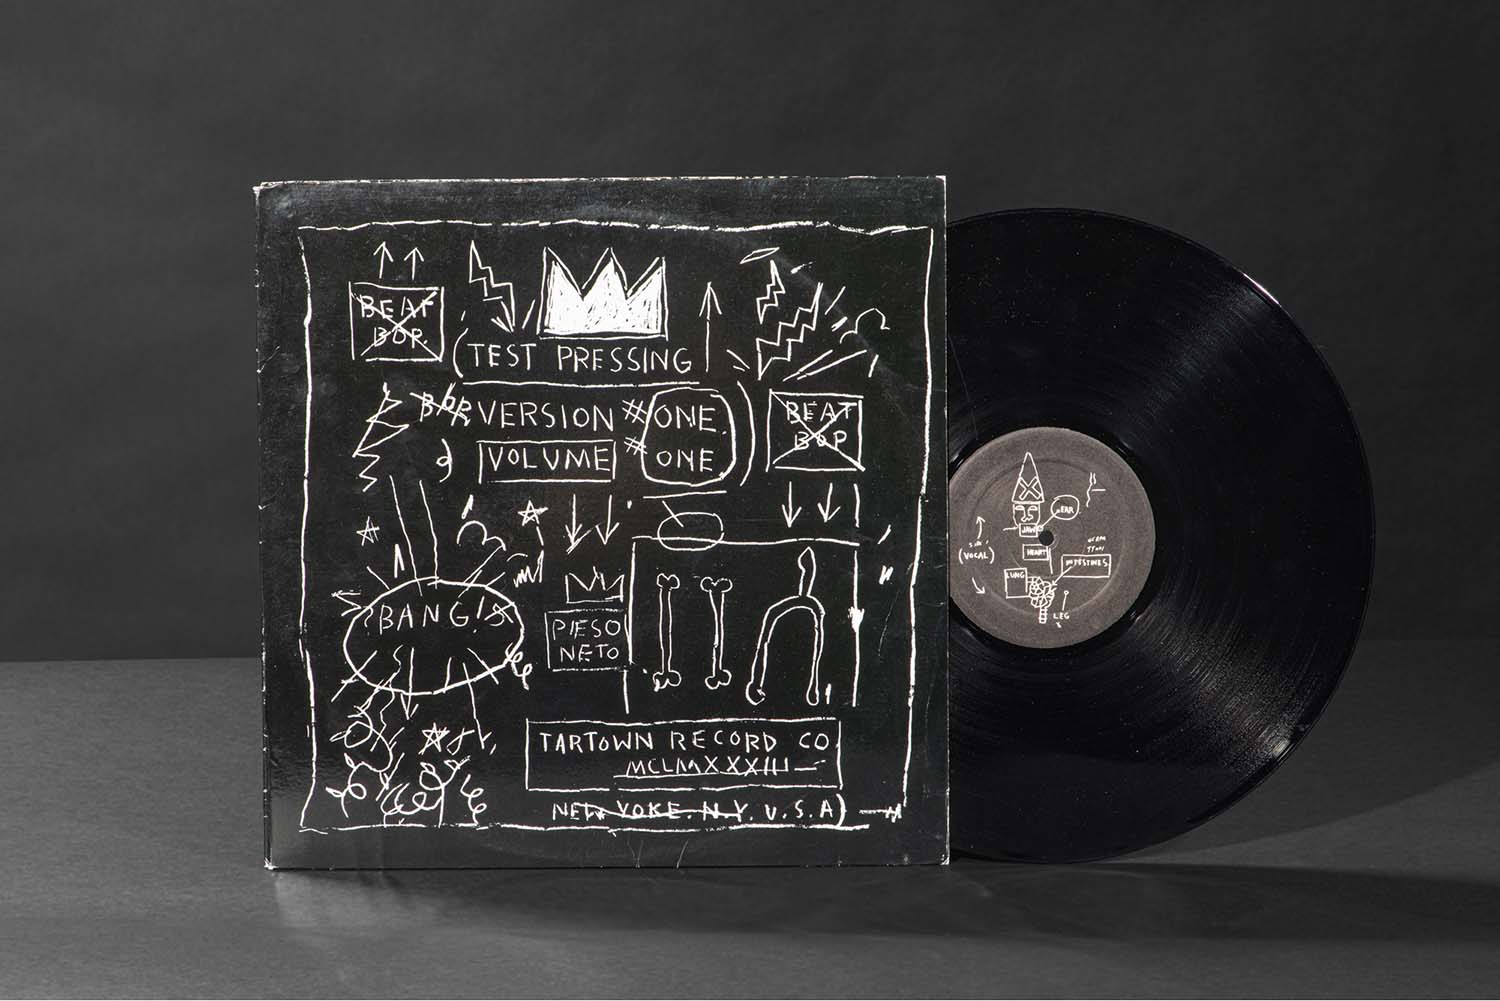 Jean-Michel Basquiat's artwork for Rammellzee and K-Rob's Beat Bop